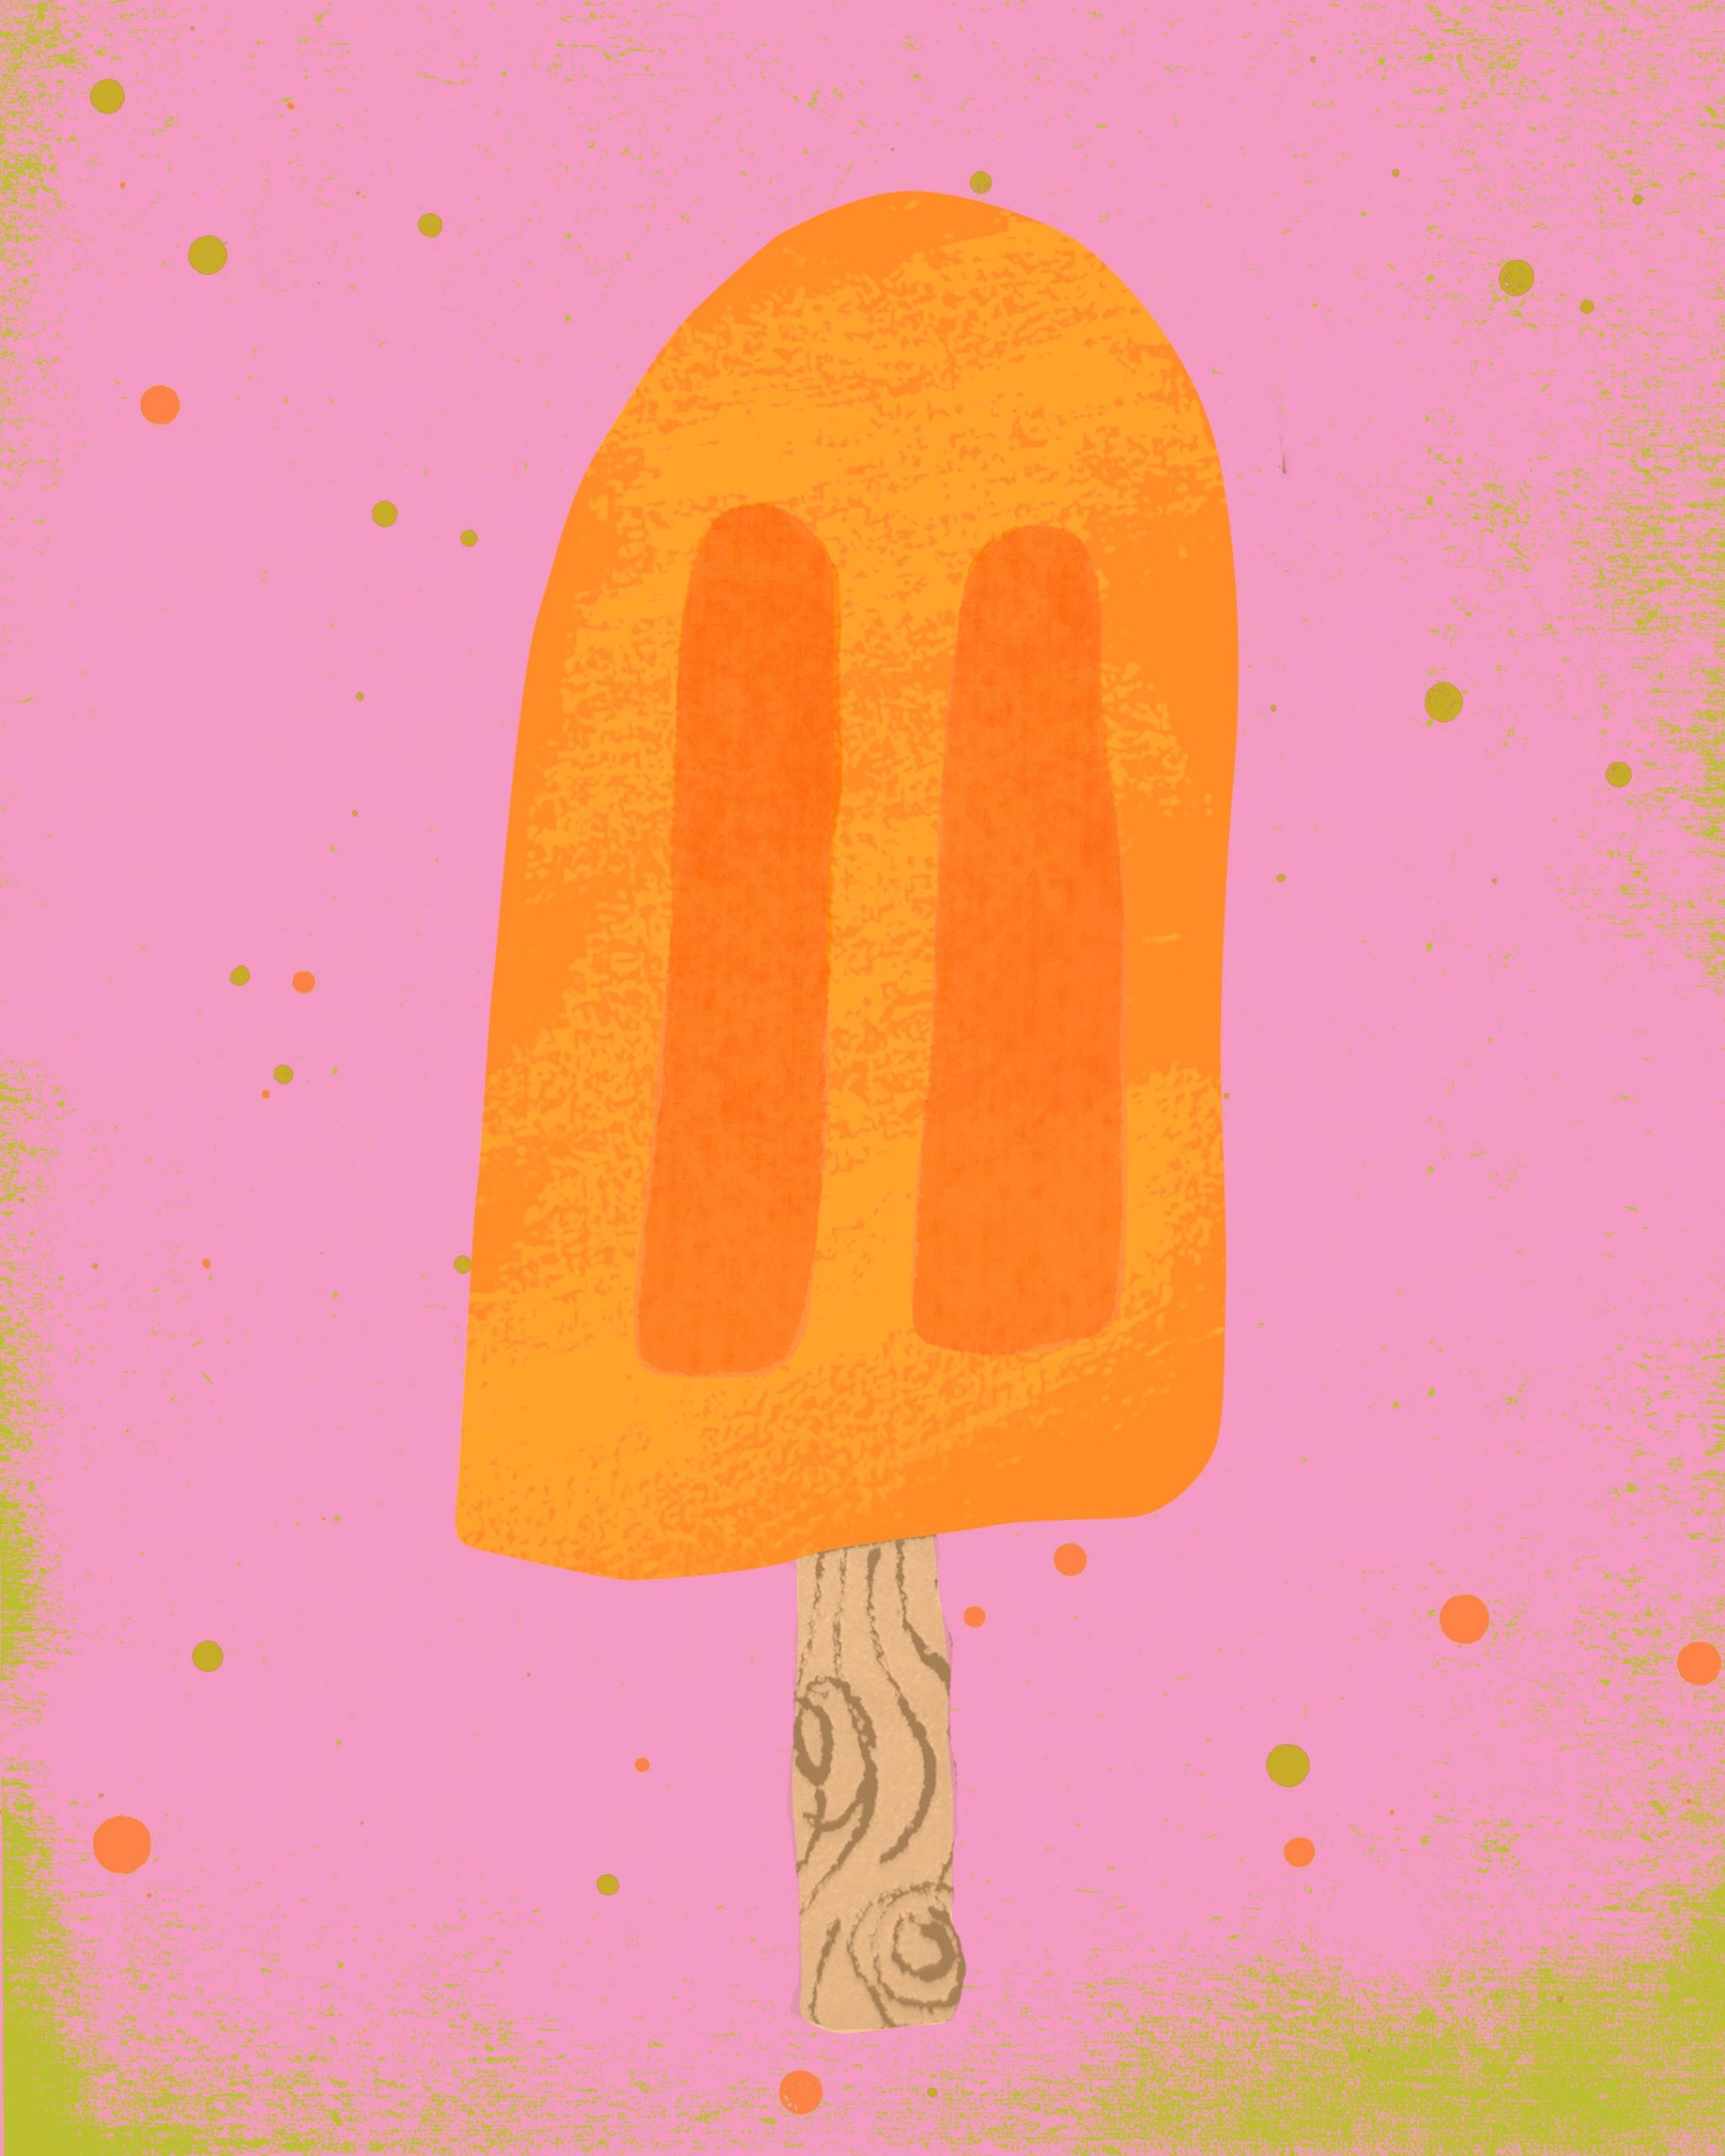 illustration of an orange popsicle